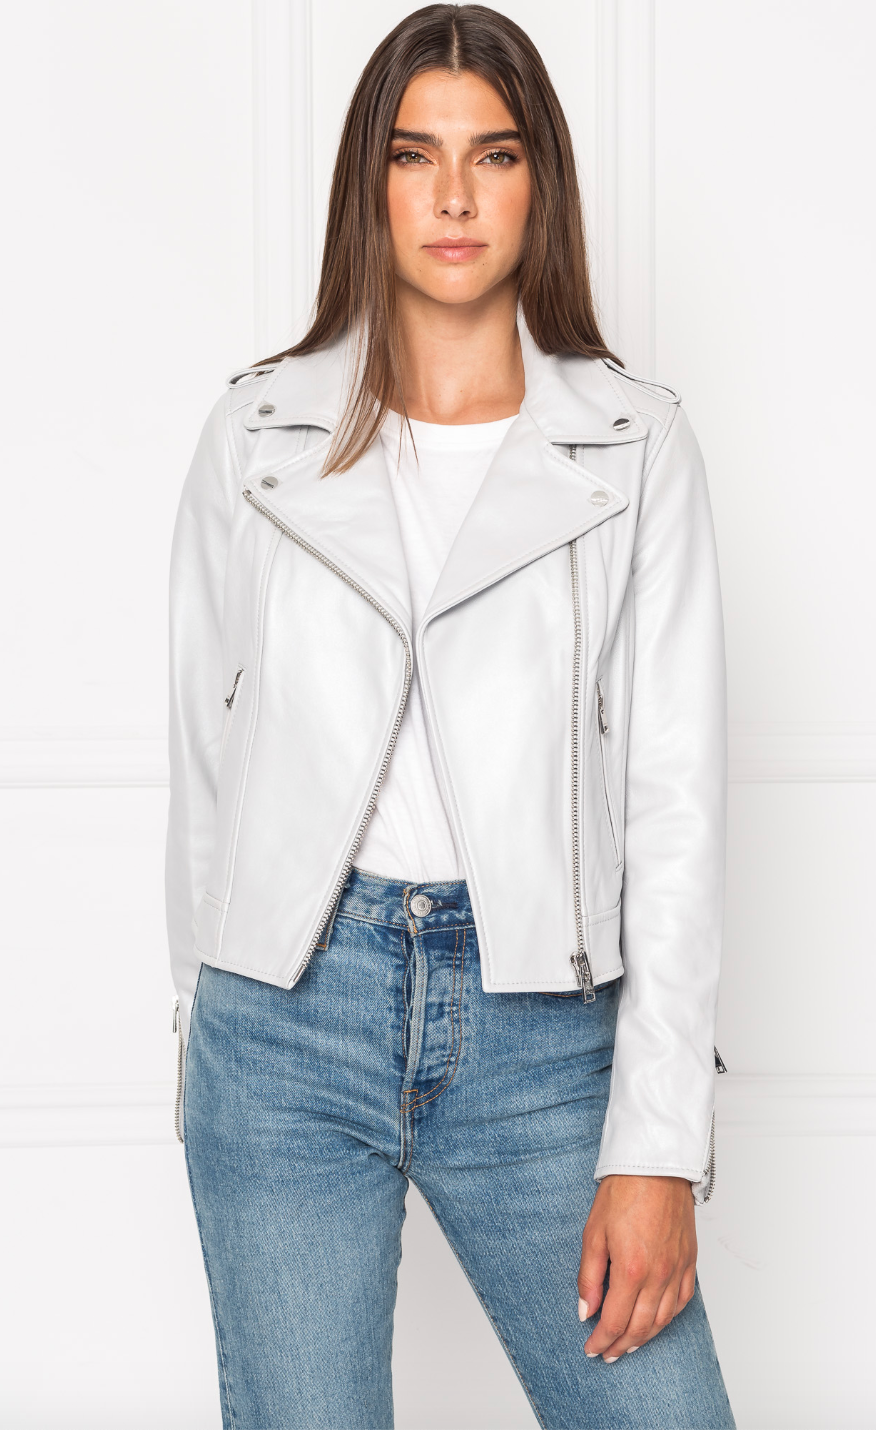 Donna Met Leather Jacket